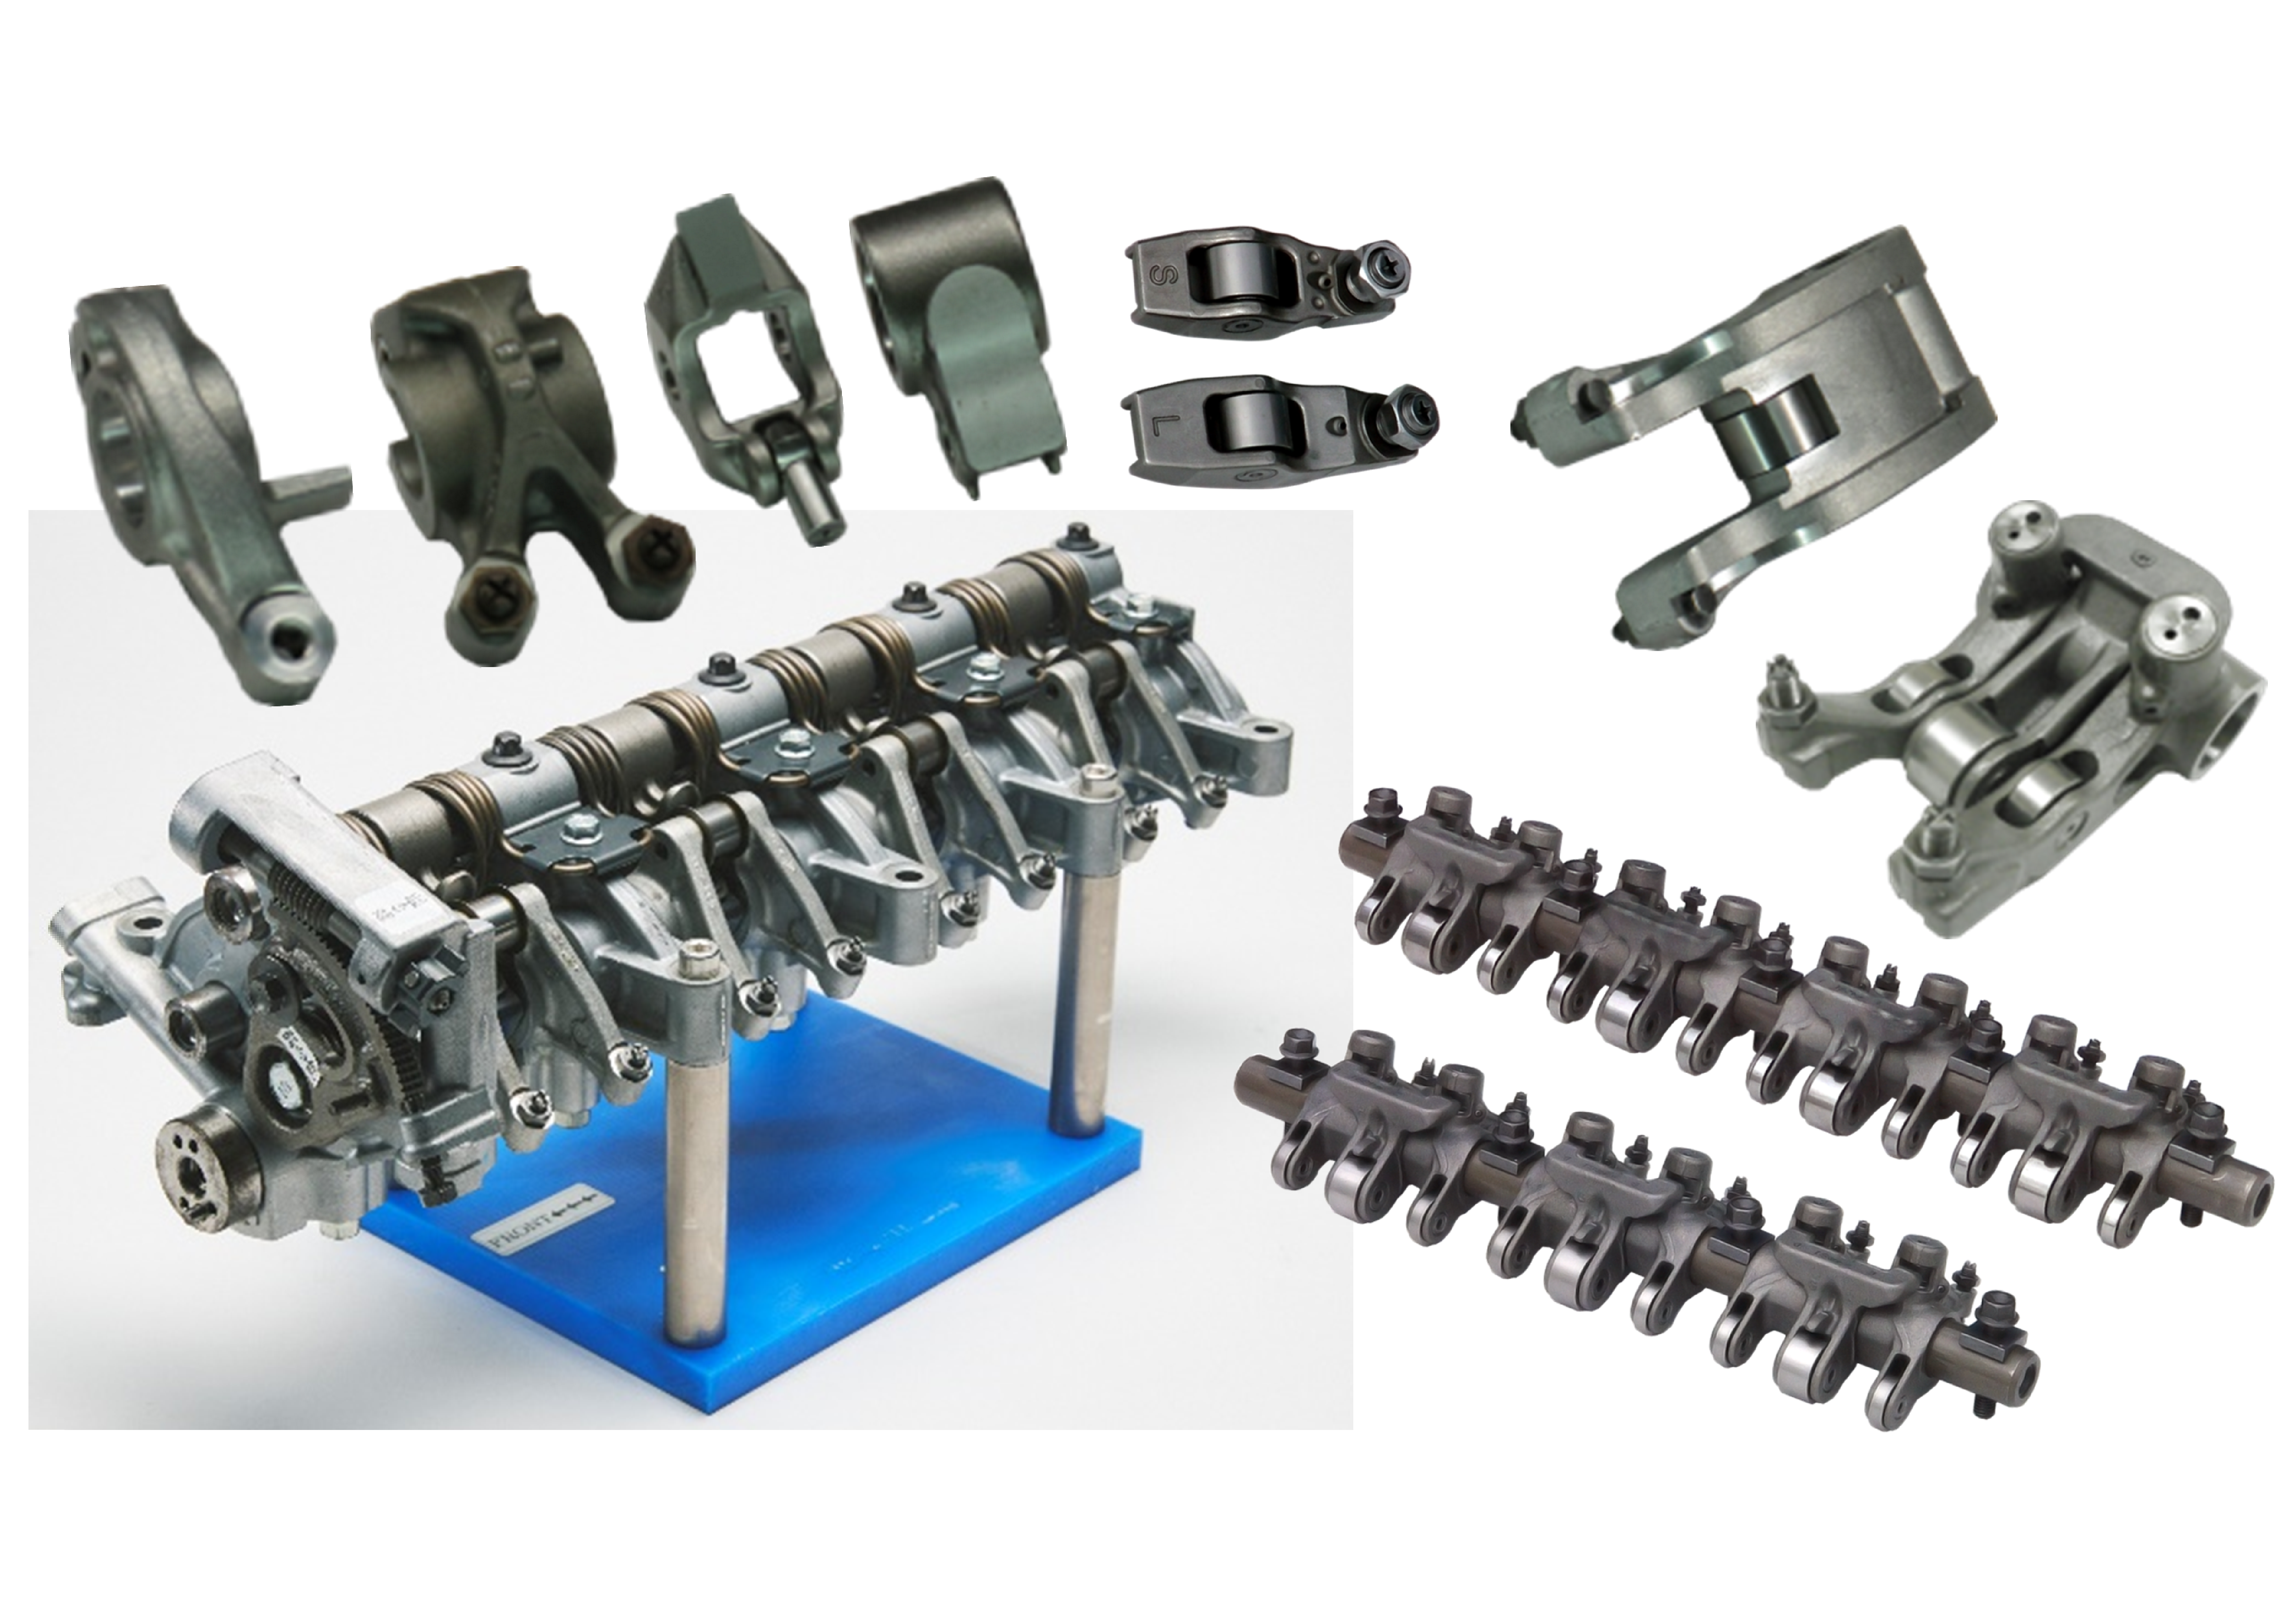 Automotive Engine Parts, Valve Train Units – Products and Services